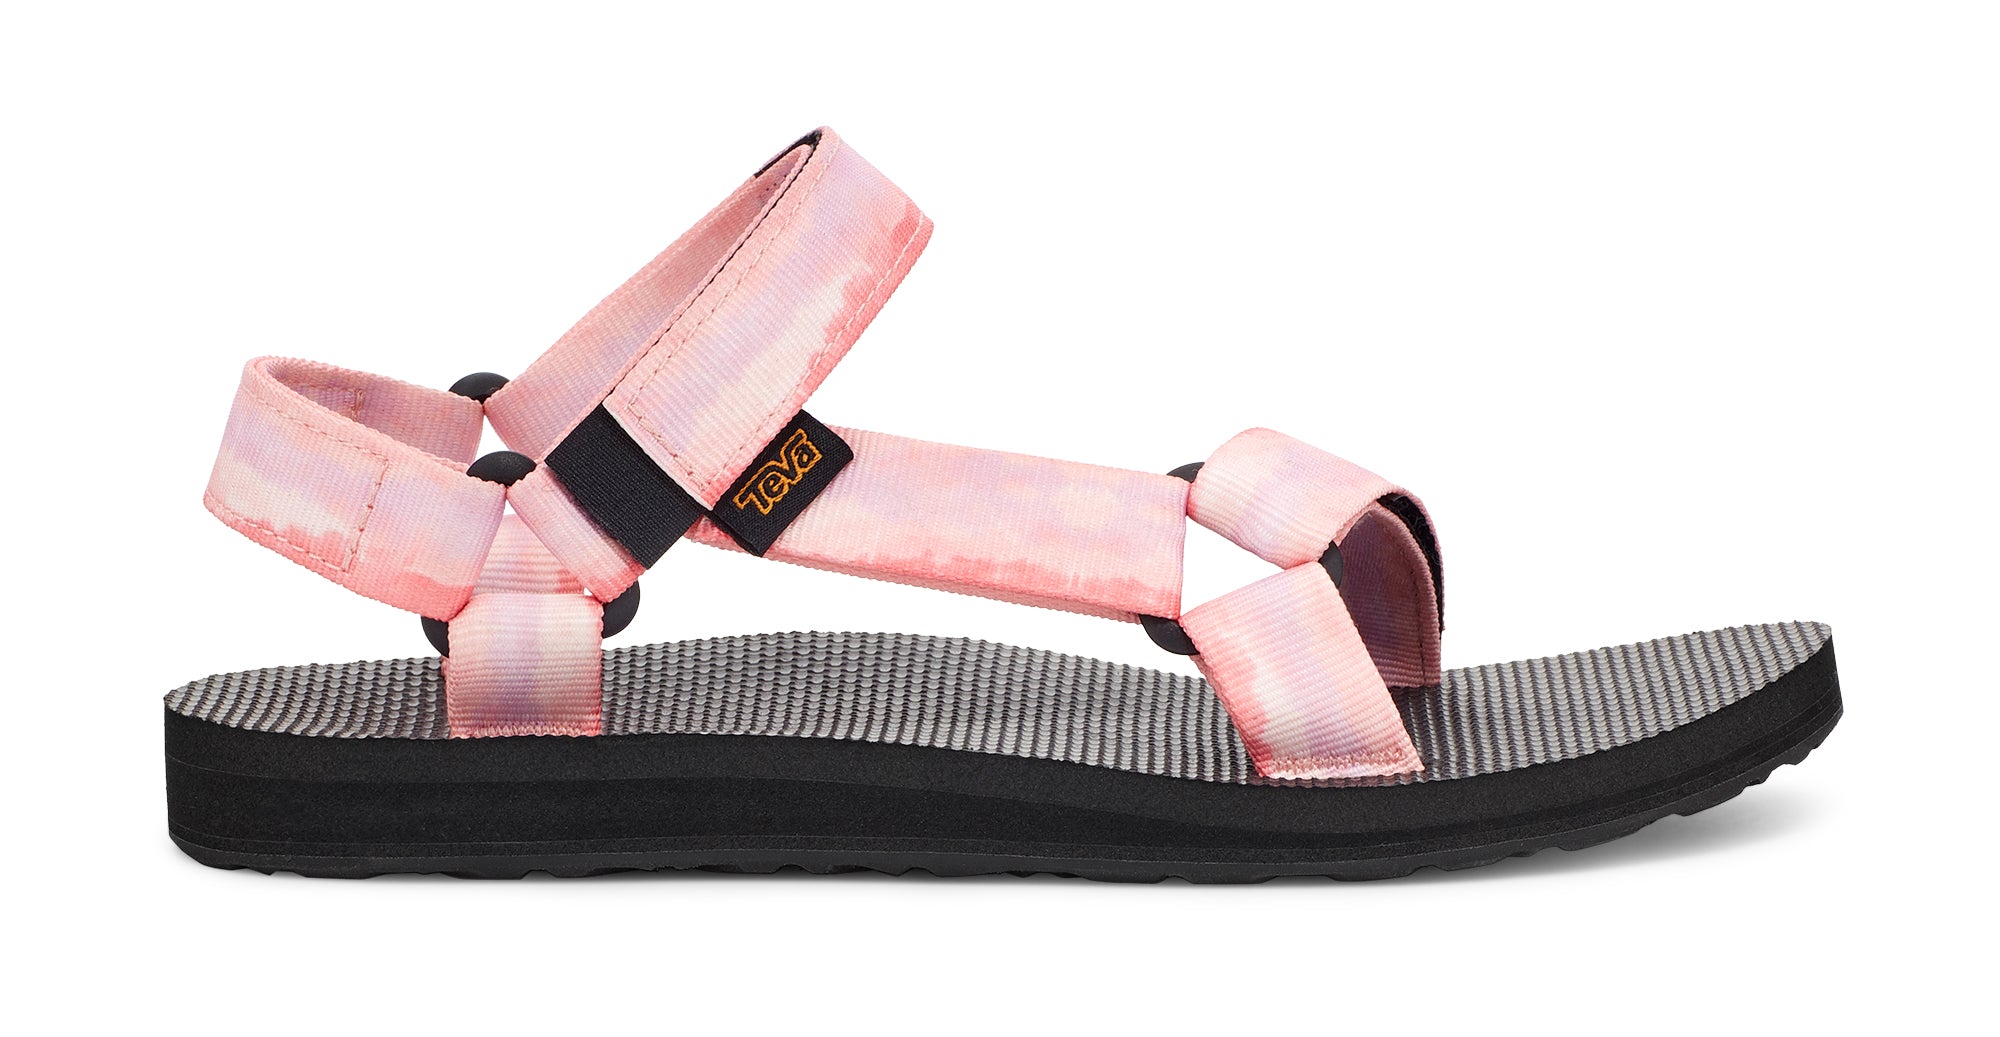 Teva Original Universal Tie-Dye Womens Sandal SBPN-Sorbet Pink 6